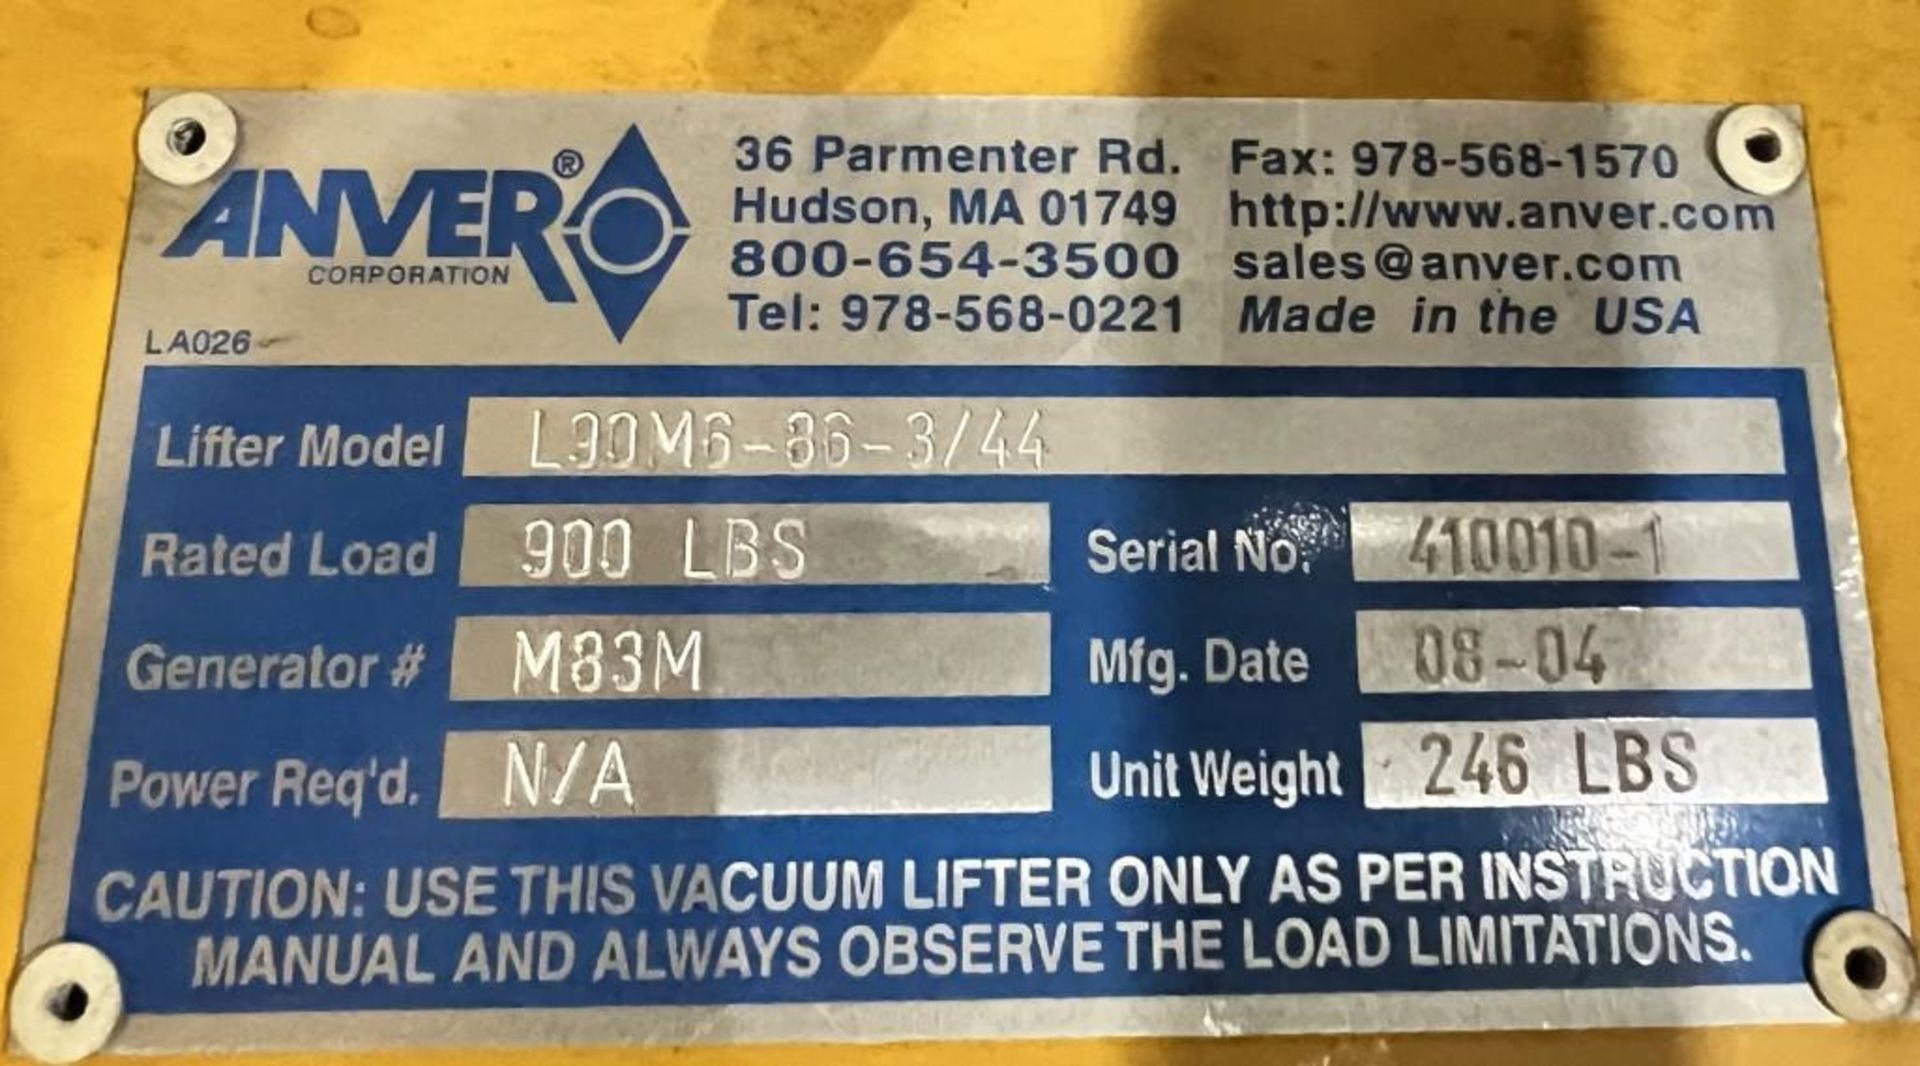 Anver (6) Pad Vacuum Lifter, Model L90M6-86-3/44. Rated load capacity 900#, serial# 410010-1, Built - Image 10 of 13